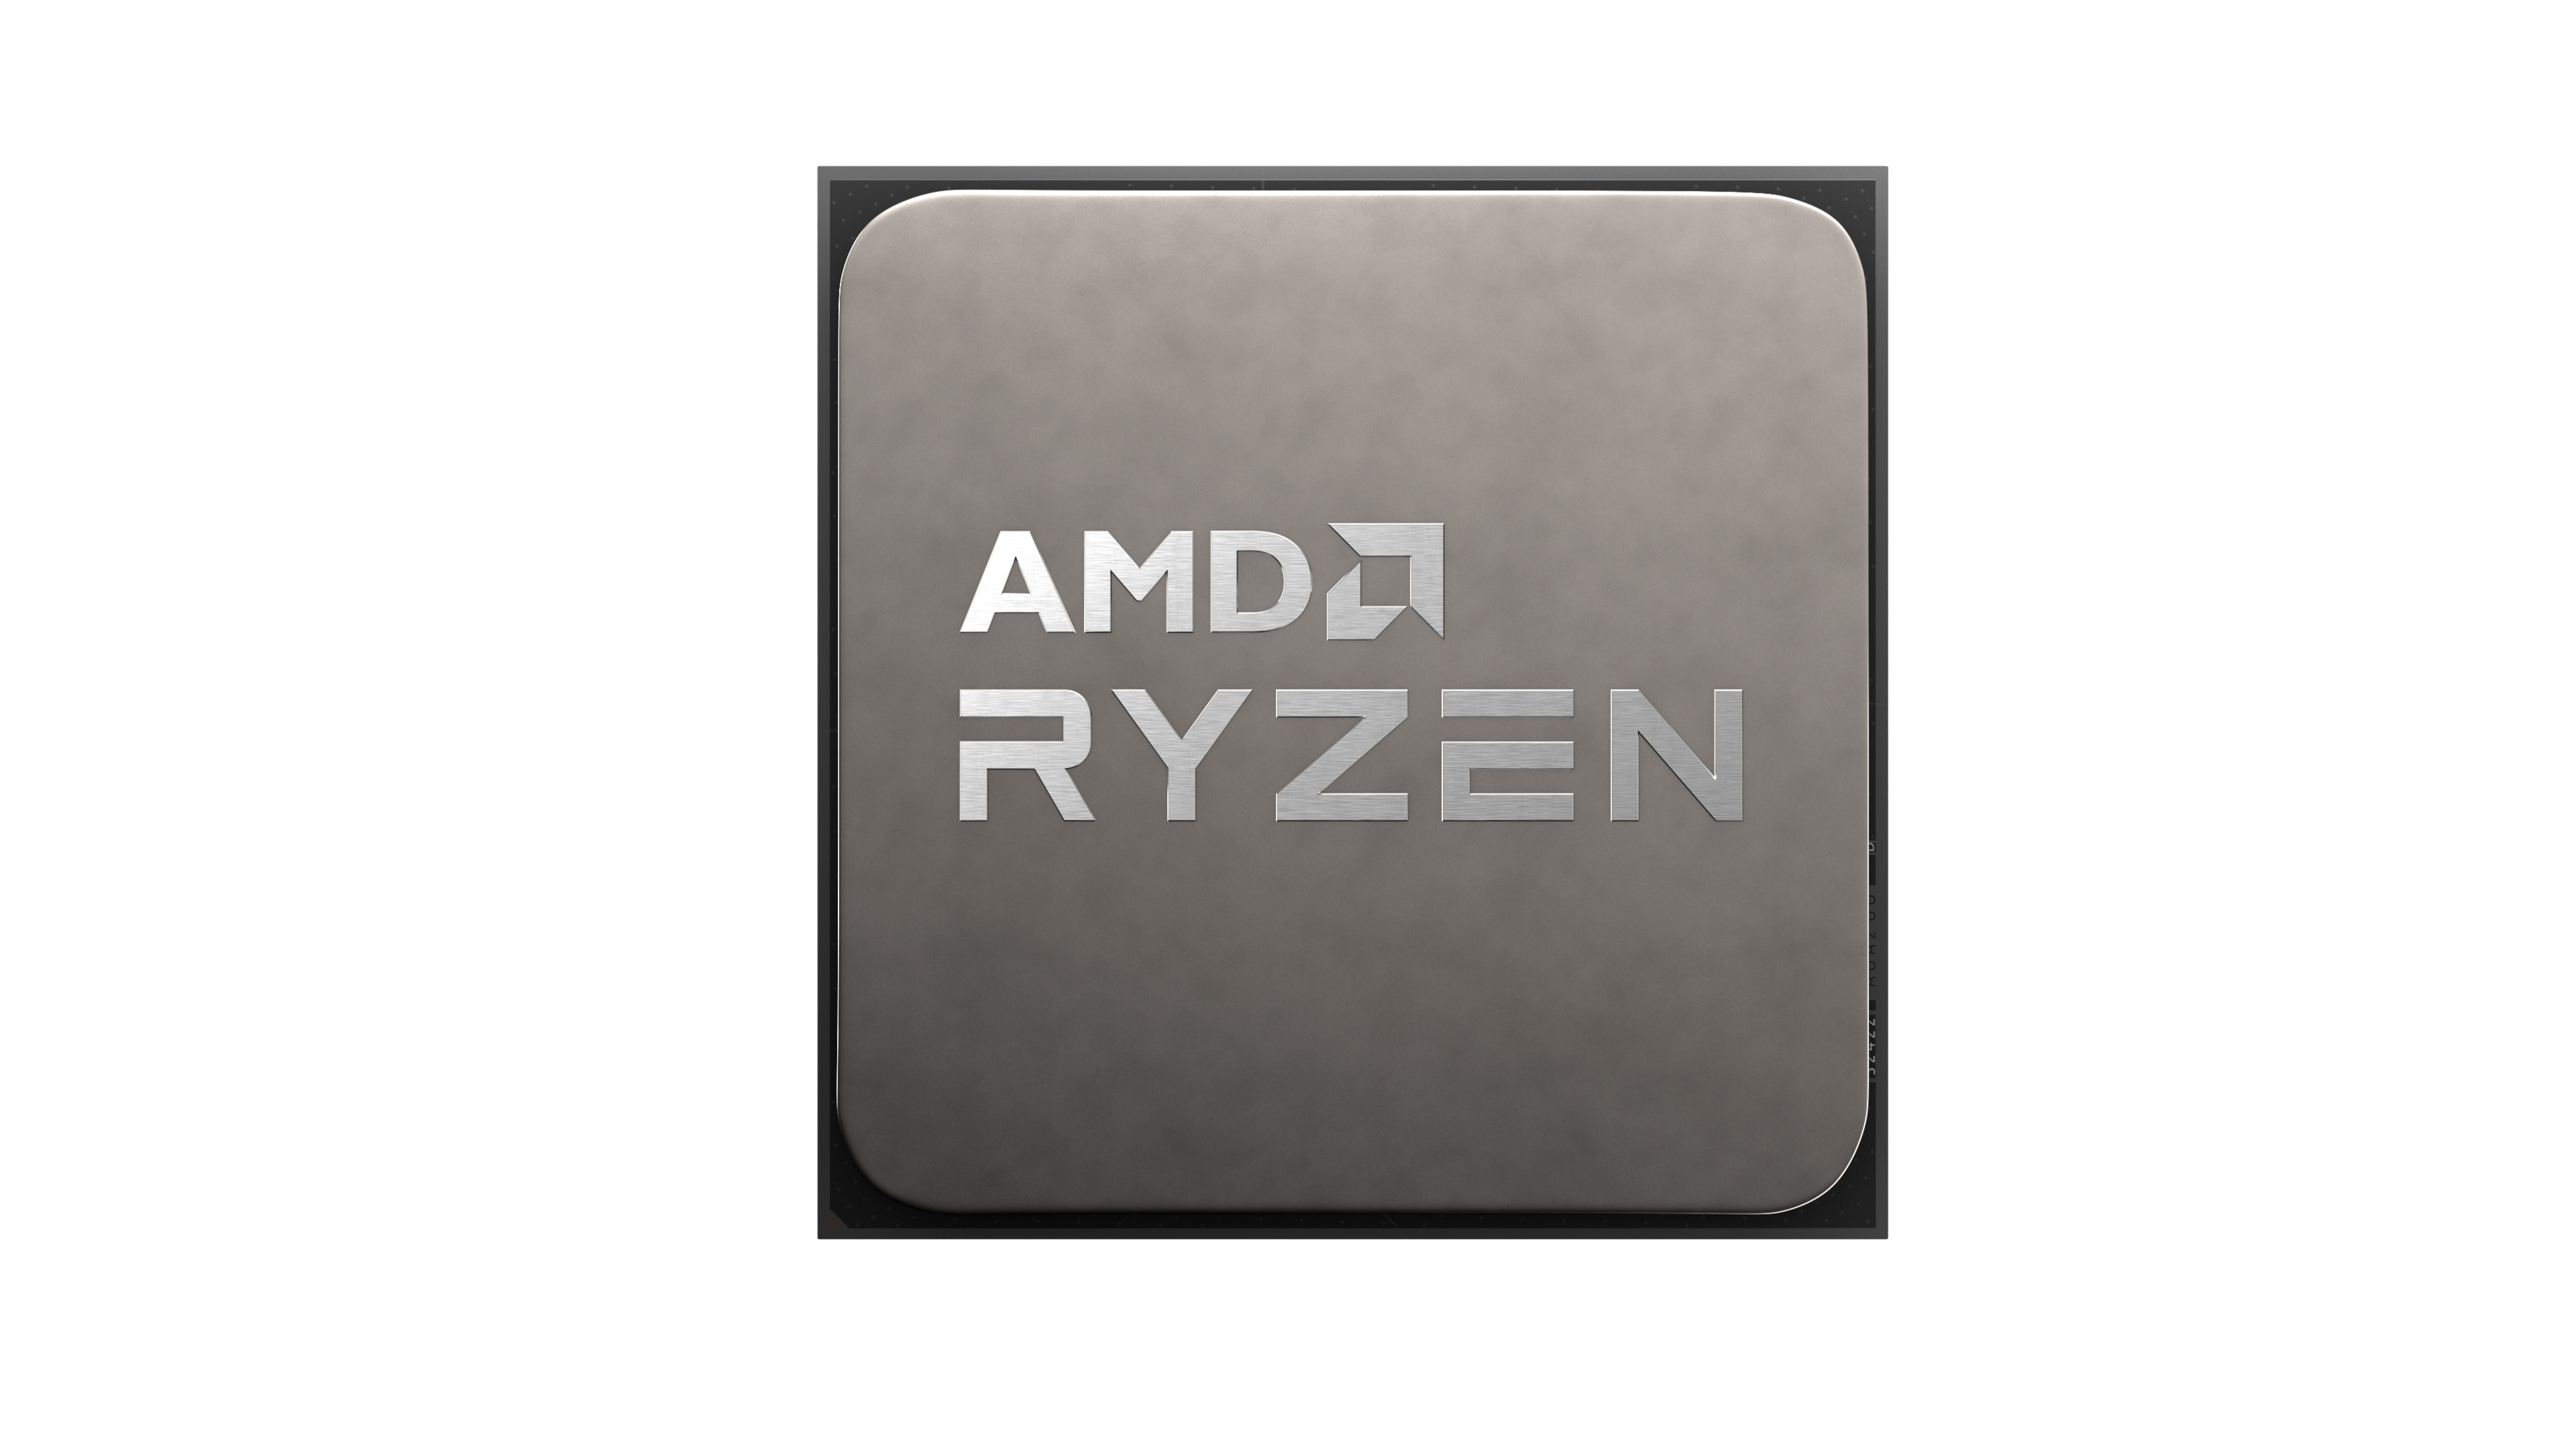 AMD 5600 Prozessor mit Mehrfarbig Boxed-Kühler